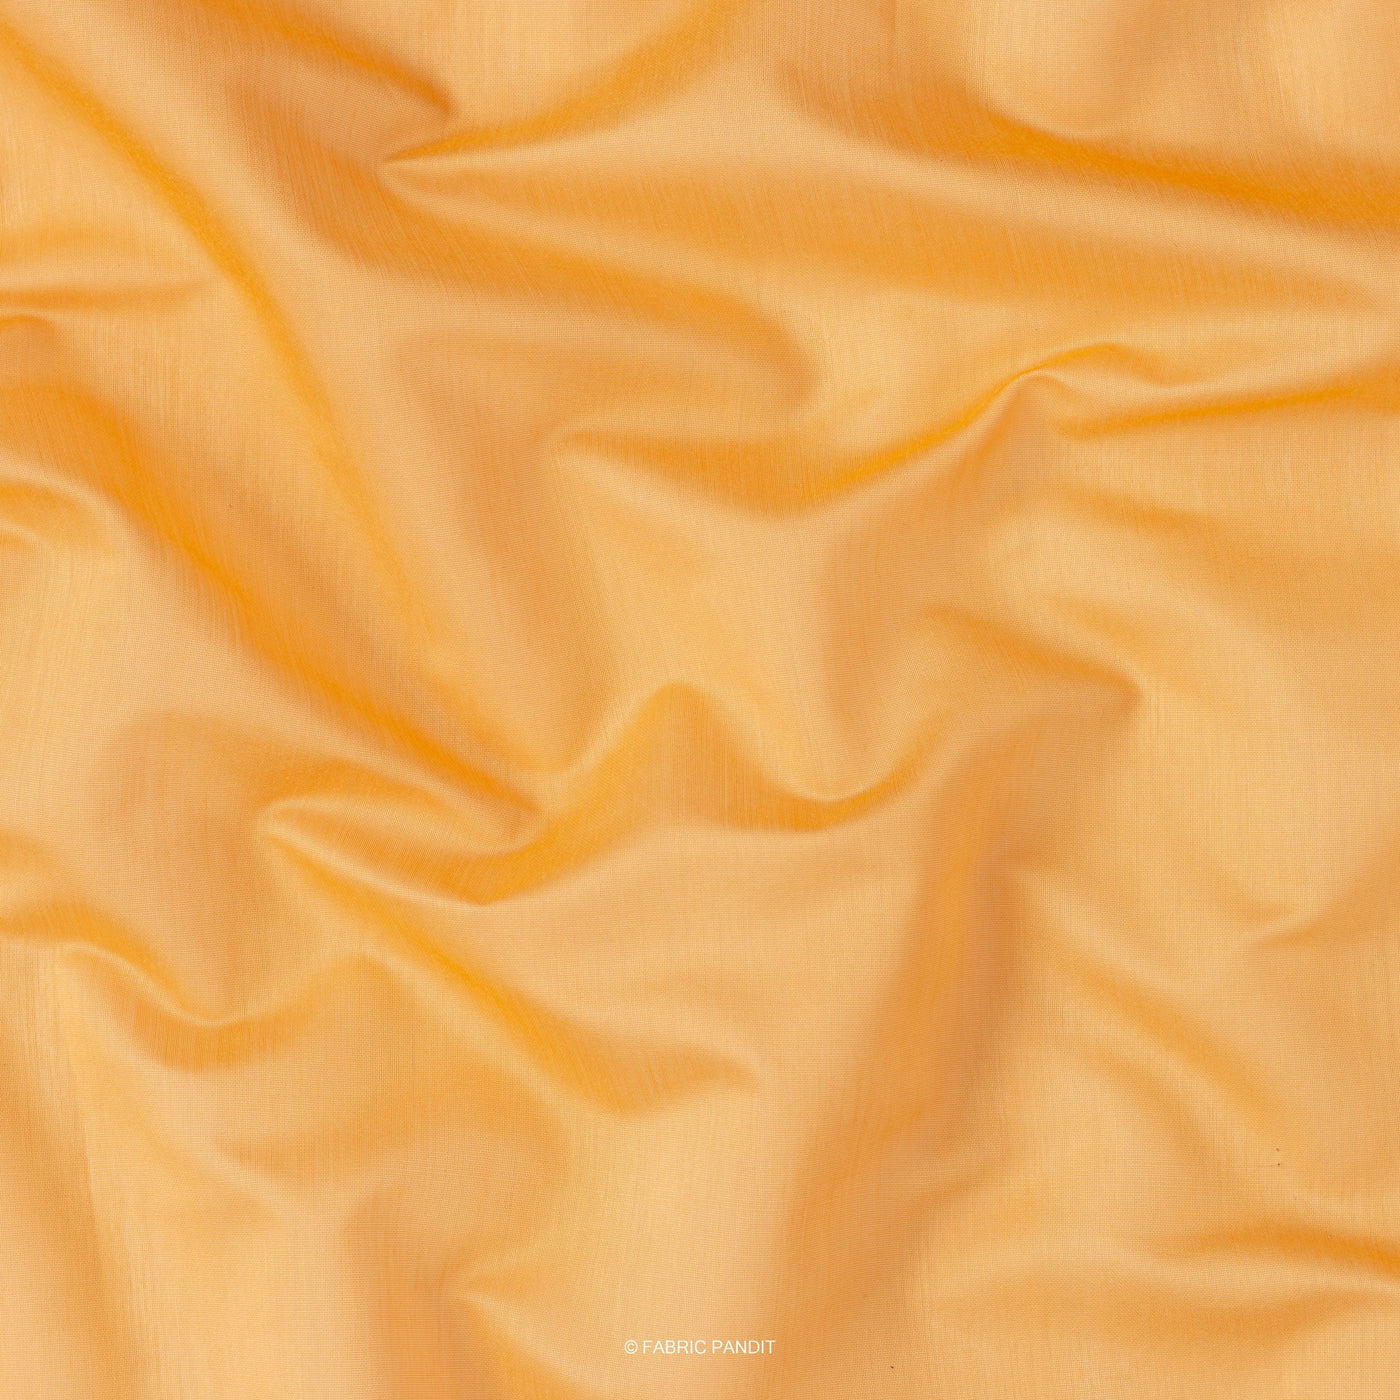 Fabric Pandit Fabric Saffron Yellow Color Plain Chanderi Fabric (Width 43 Inches)